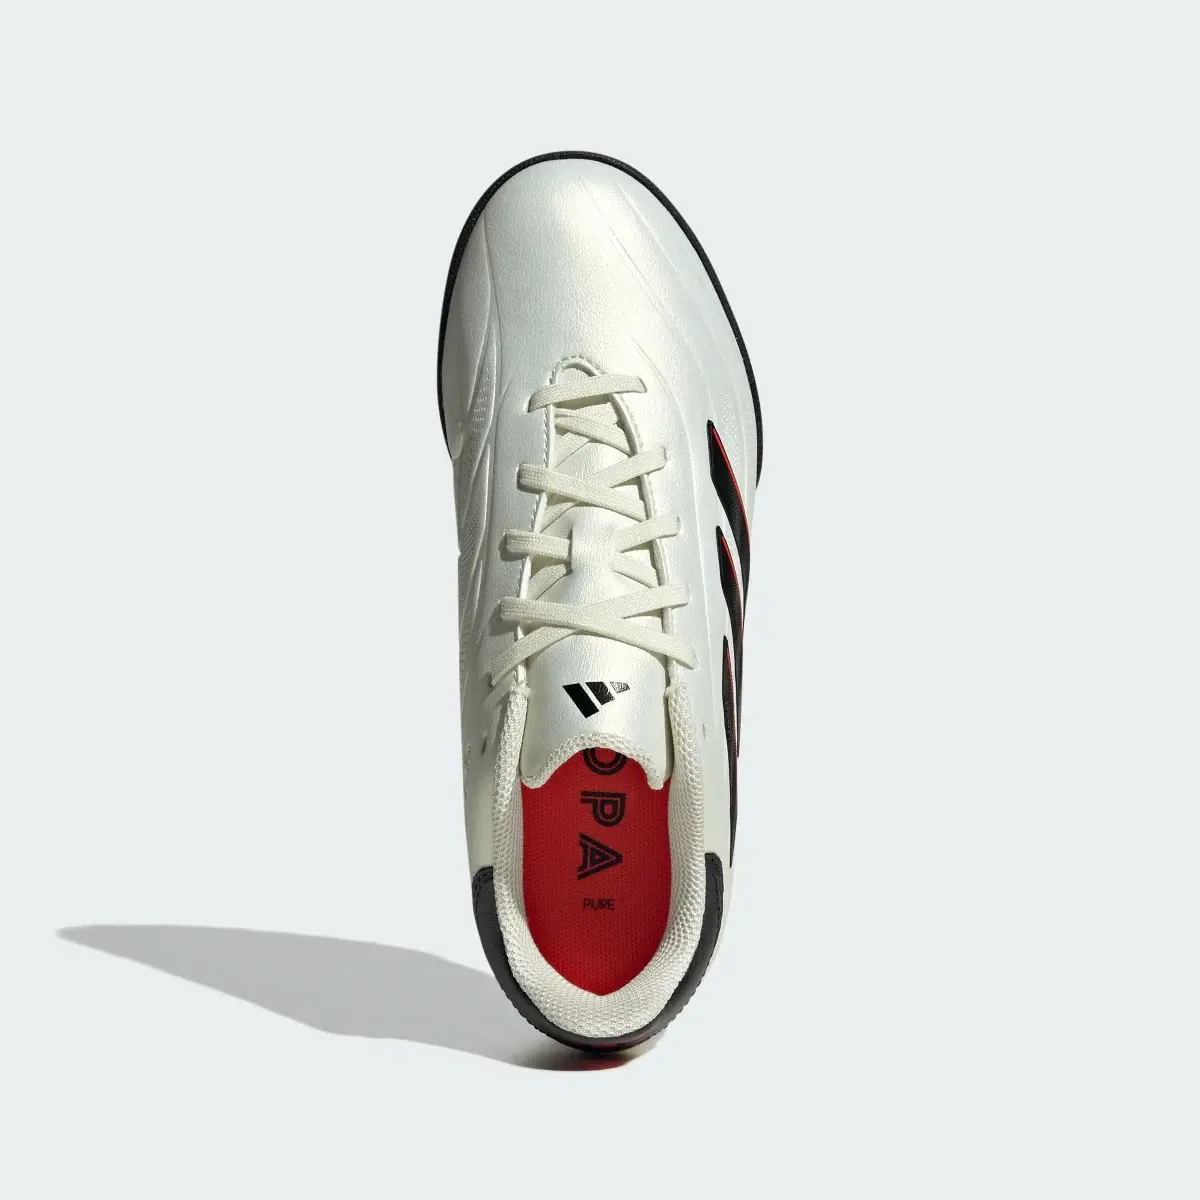 Adidas Copa Pure II League Turf Shoes. 3